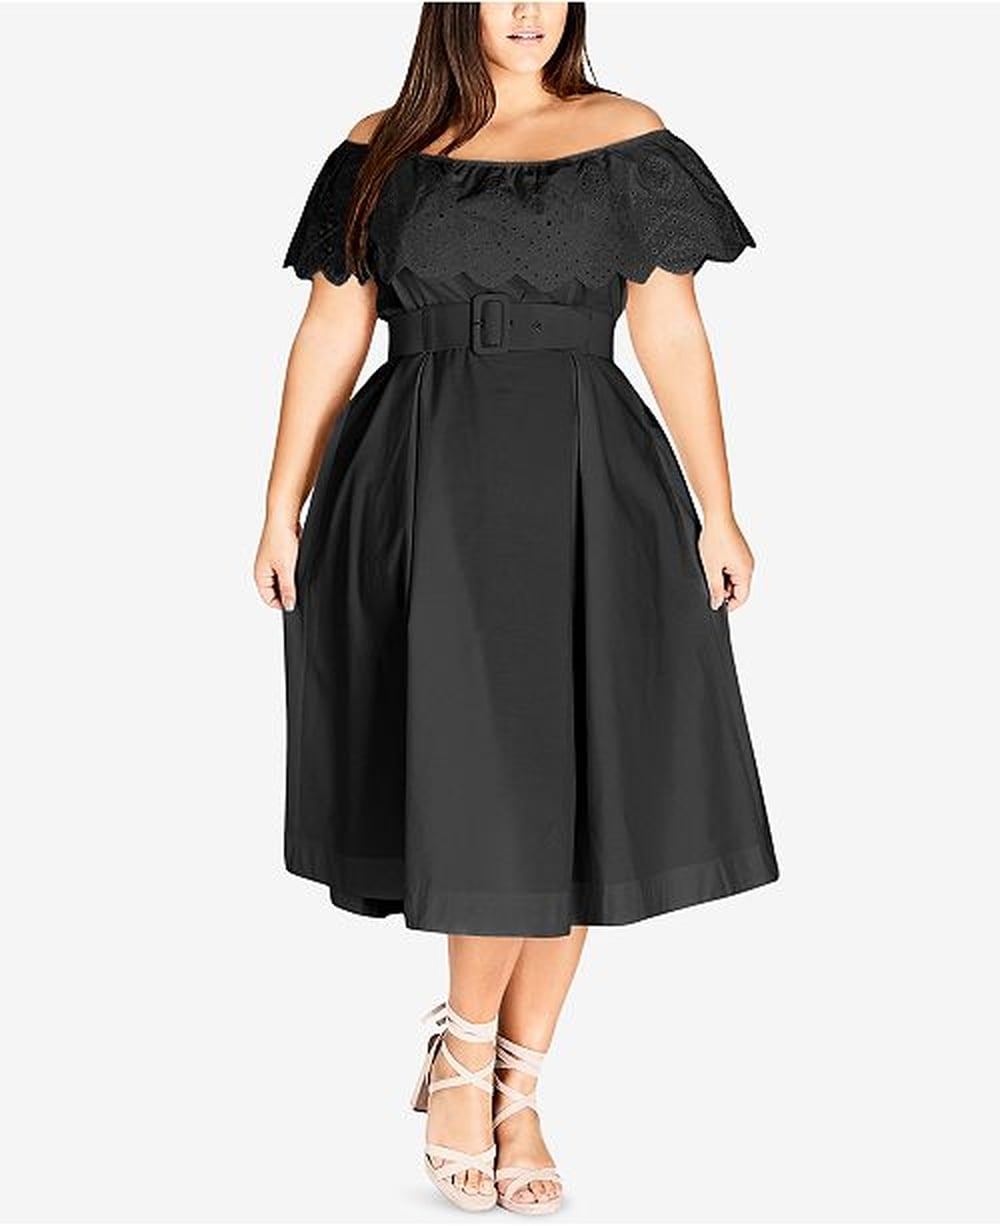 Meghan Markle's Black Dior Dress | POPSUGAR Fashion